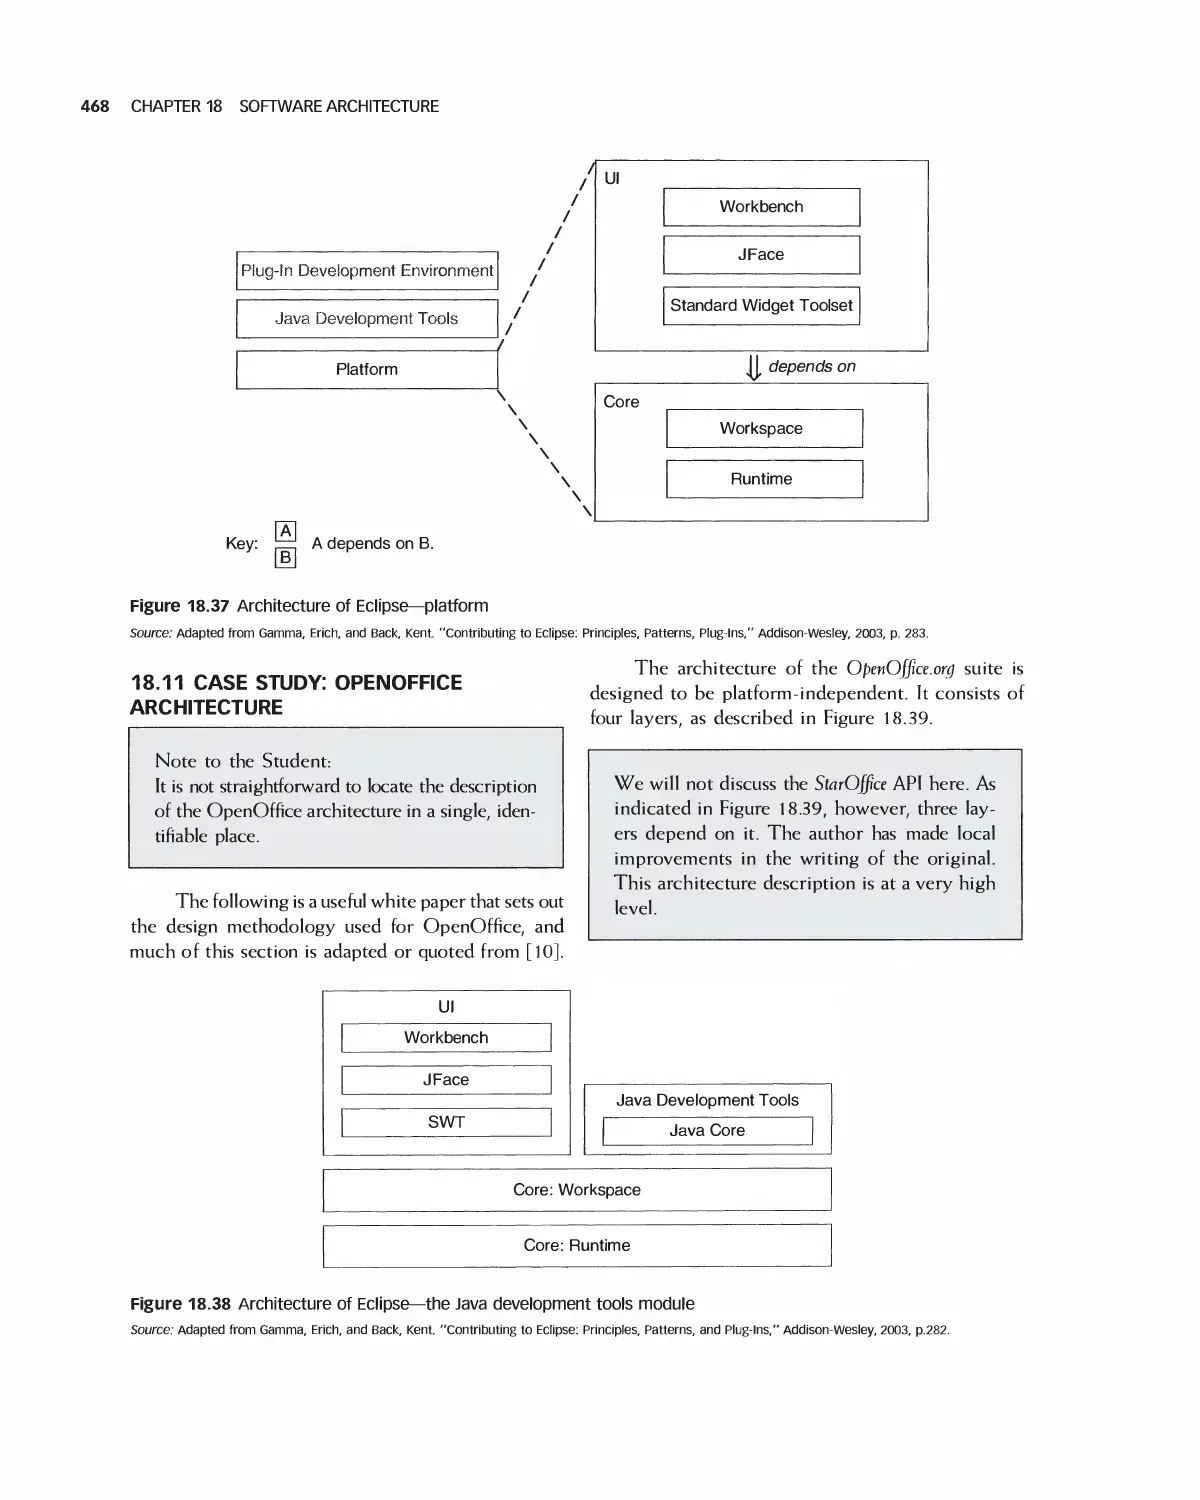 18.11 Case Study: OpenOffice Architecture